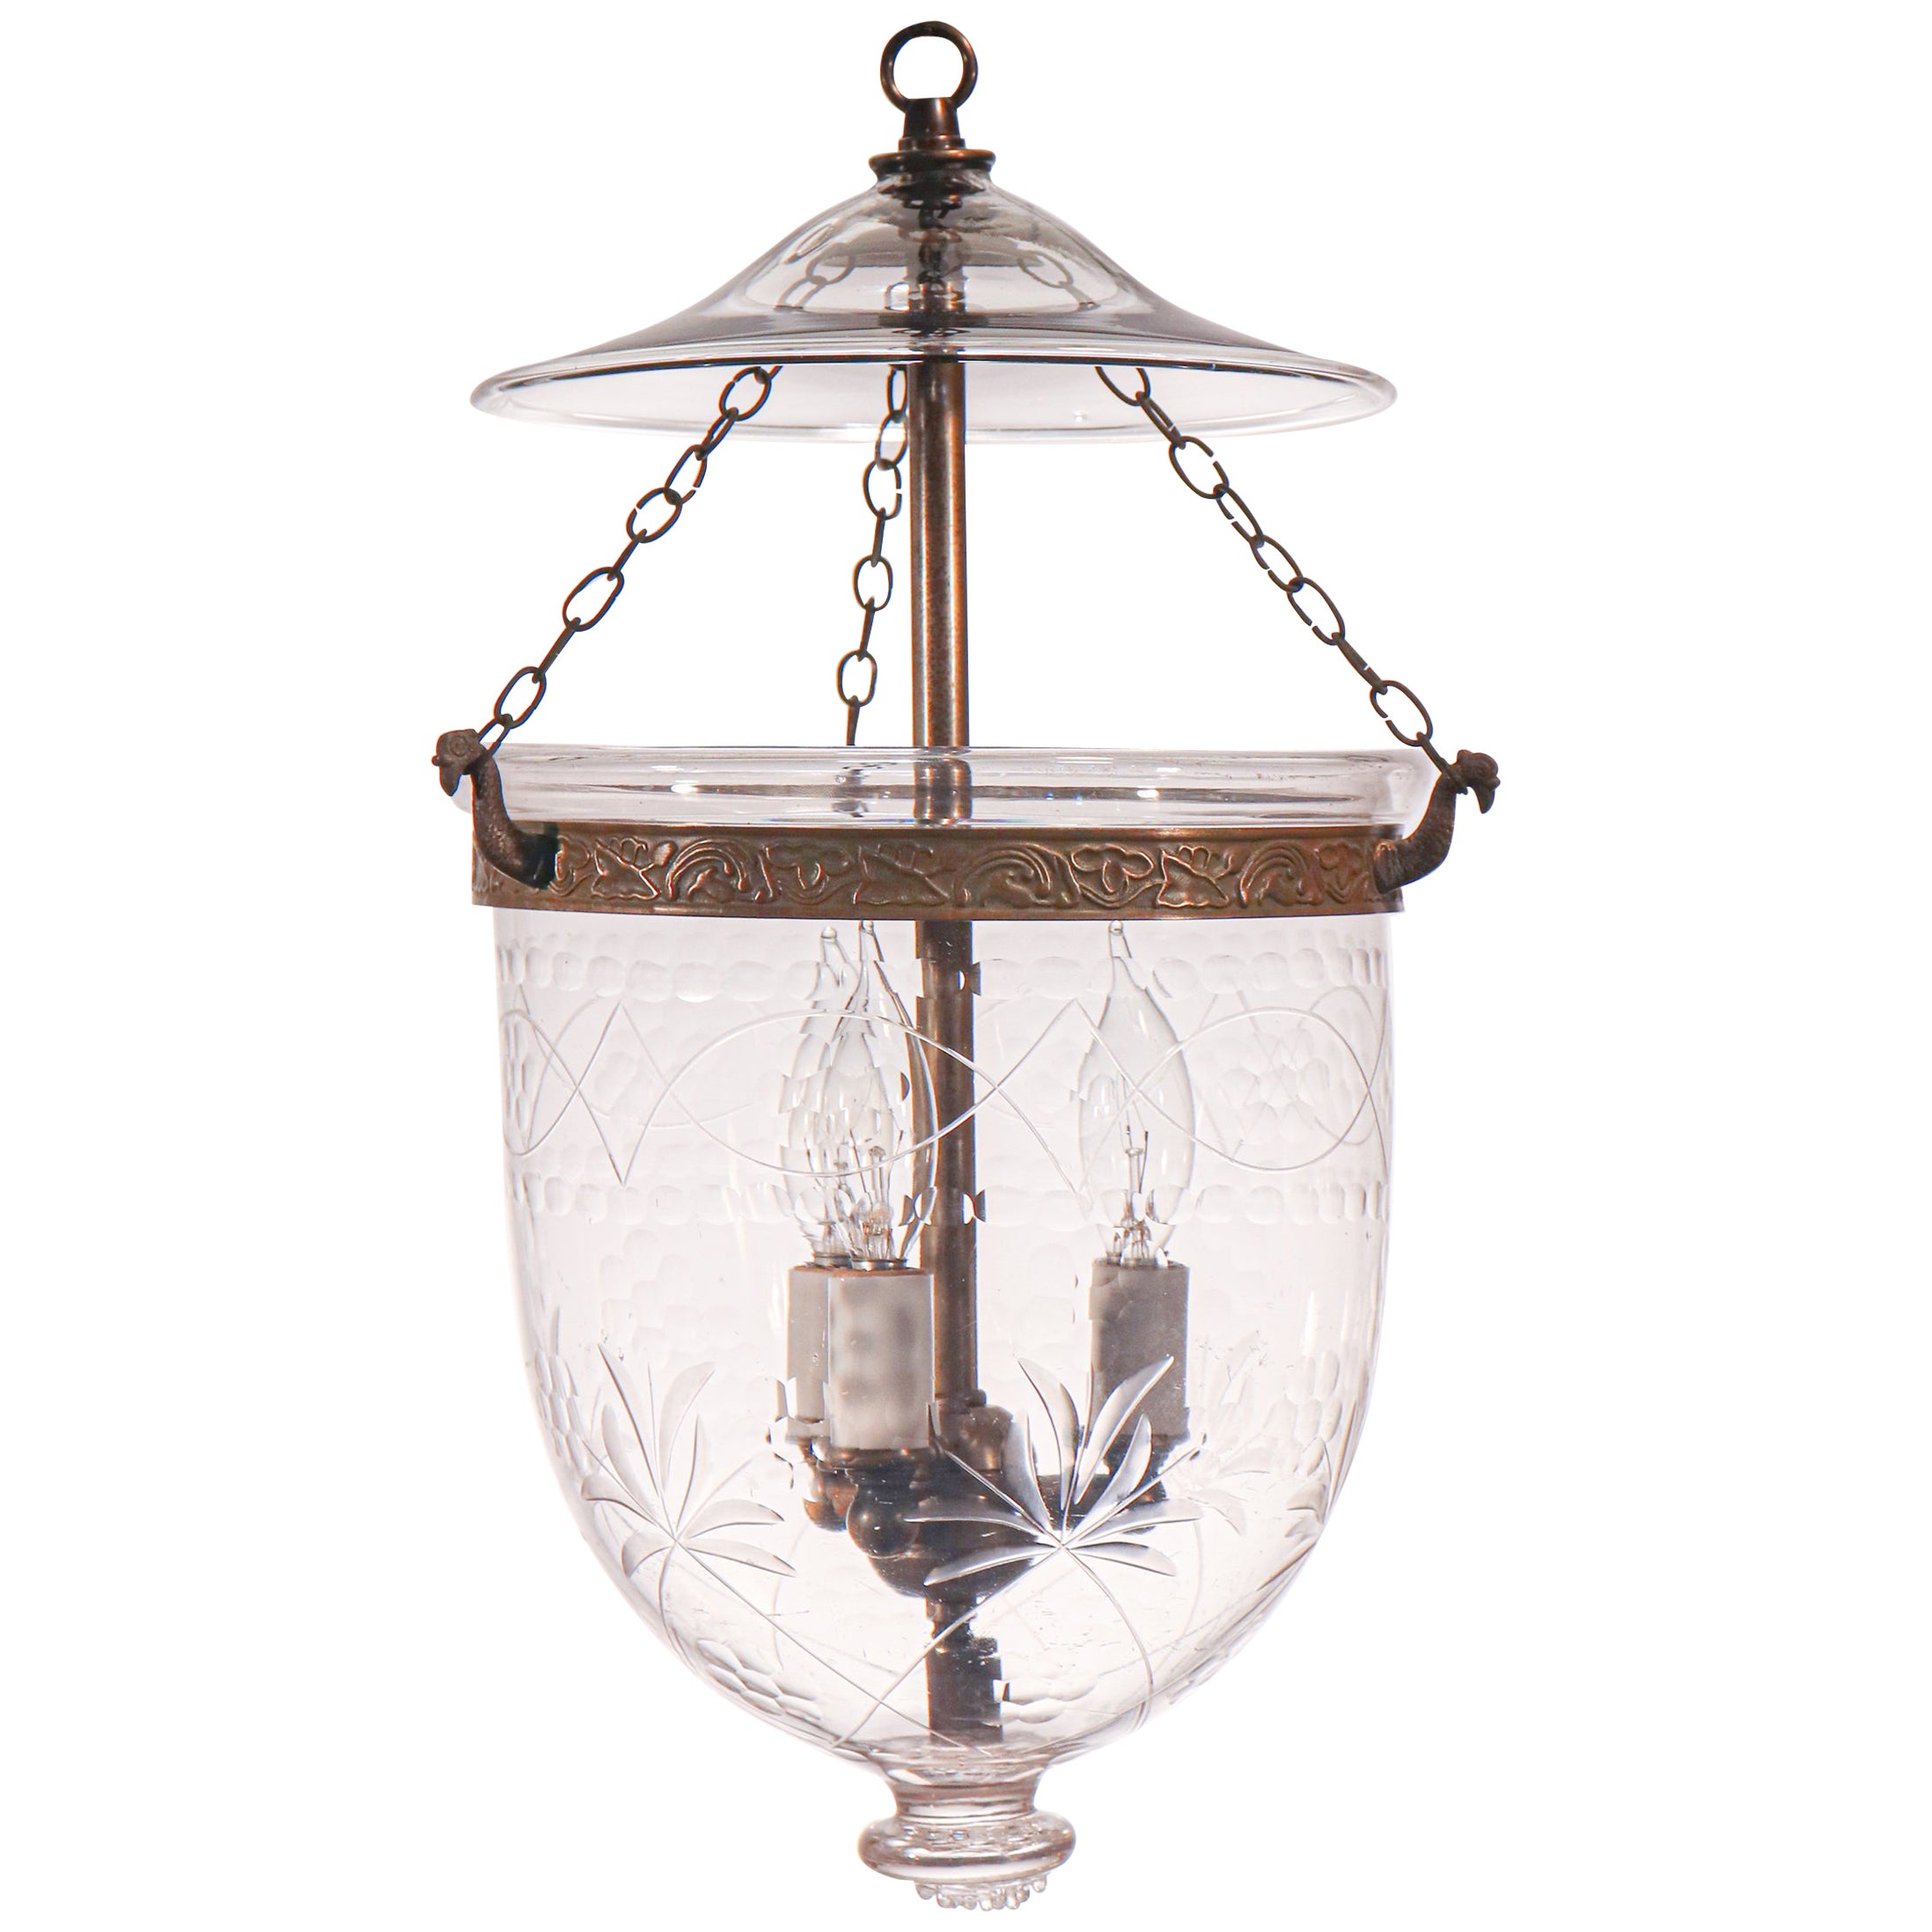 Antique Petite Bell Jar Lantern